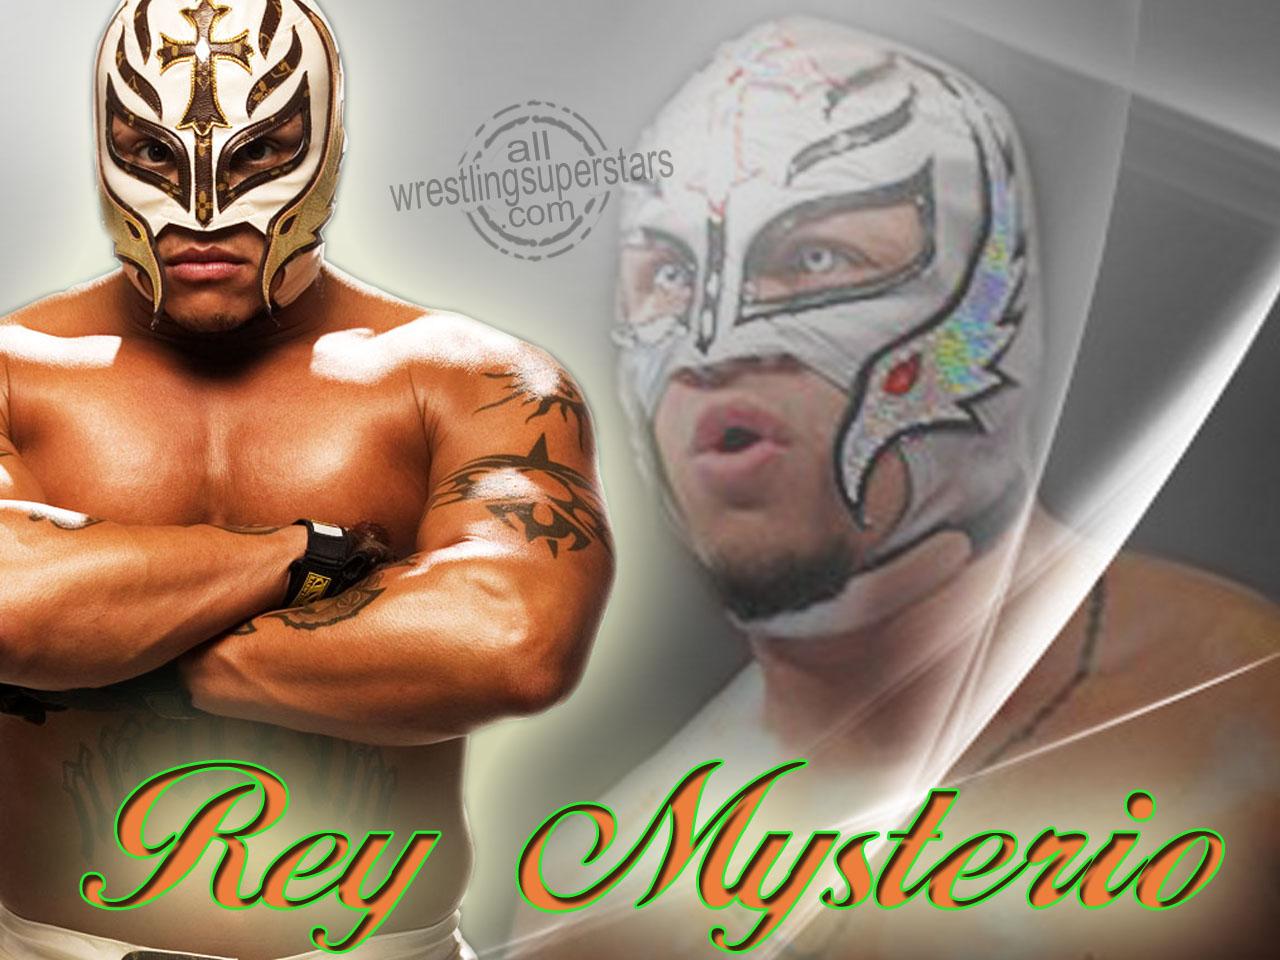 https://blogger.googleusercontent.com/img/b/R29vZ2xl/AVvXsEgY2j_pZ_TcIJEzLzL5IgNxoVFt1e2BZx3fmfvAc2N9r3gUHASZ4SGMzNE4Y8jBNXPpIllN148WdDpnKcl5ZQLXJ2PRcoTHyqCnKxeTdx8dQ8qyKZOTH9WUnvkaJxlRJhIWWQgNpJ6AoUqP/s1600/WWE+Superstar+Rey+Mysterio+wallpapers+2012.jpg